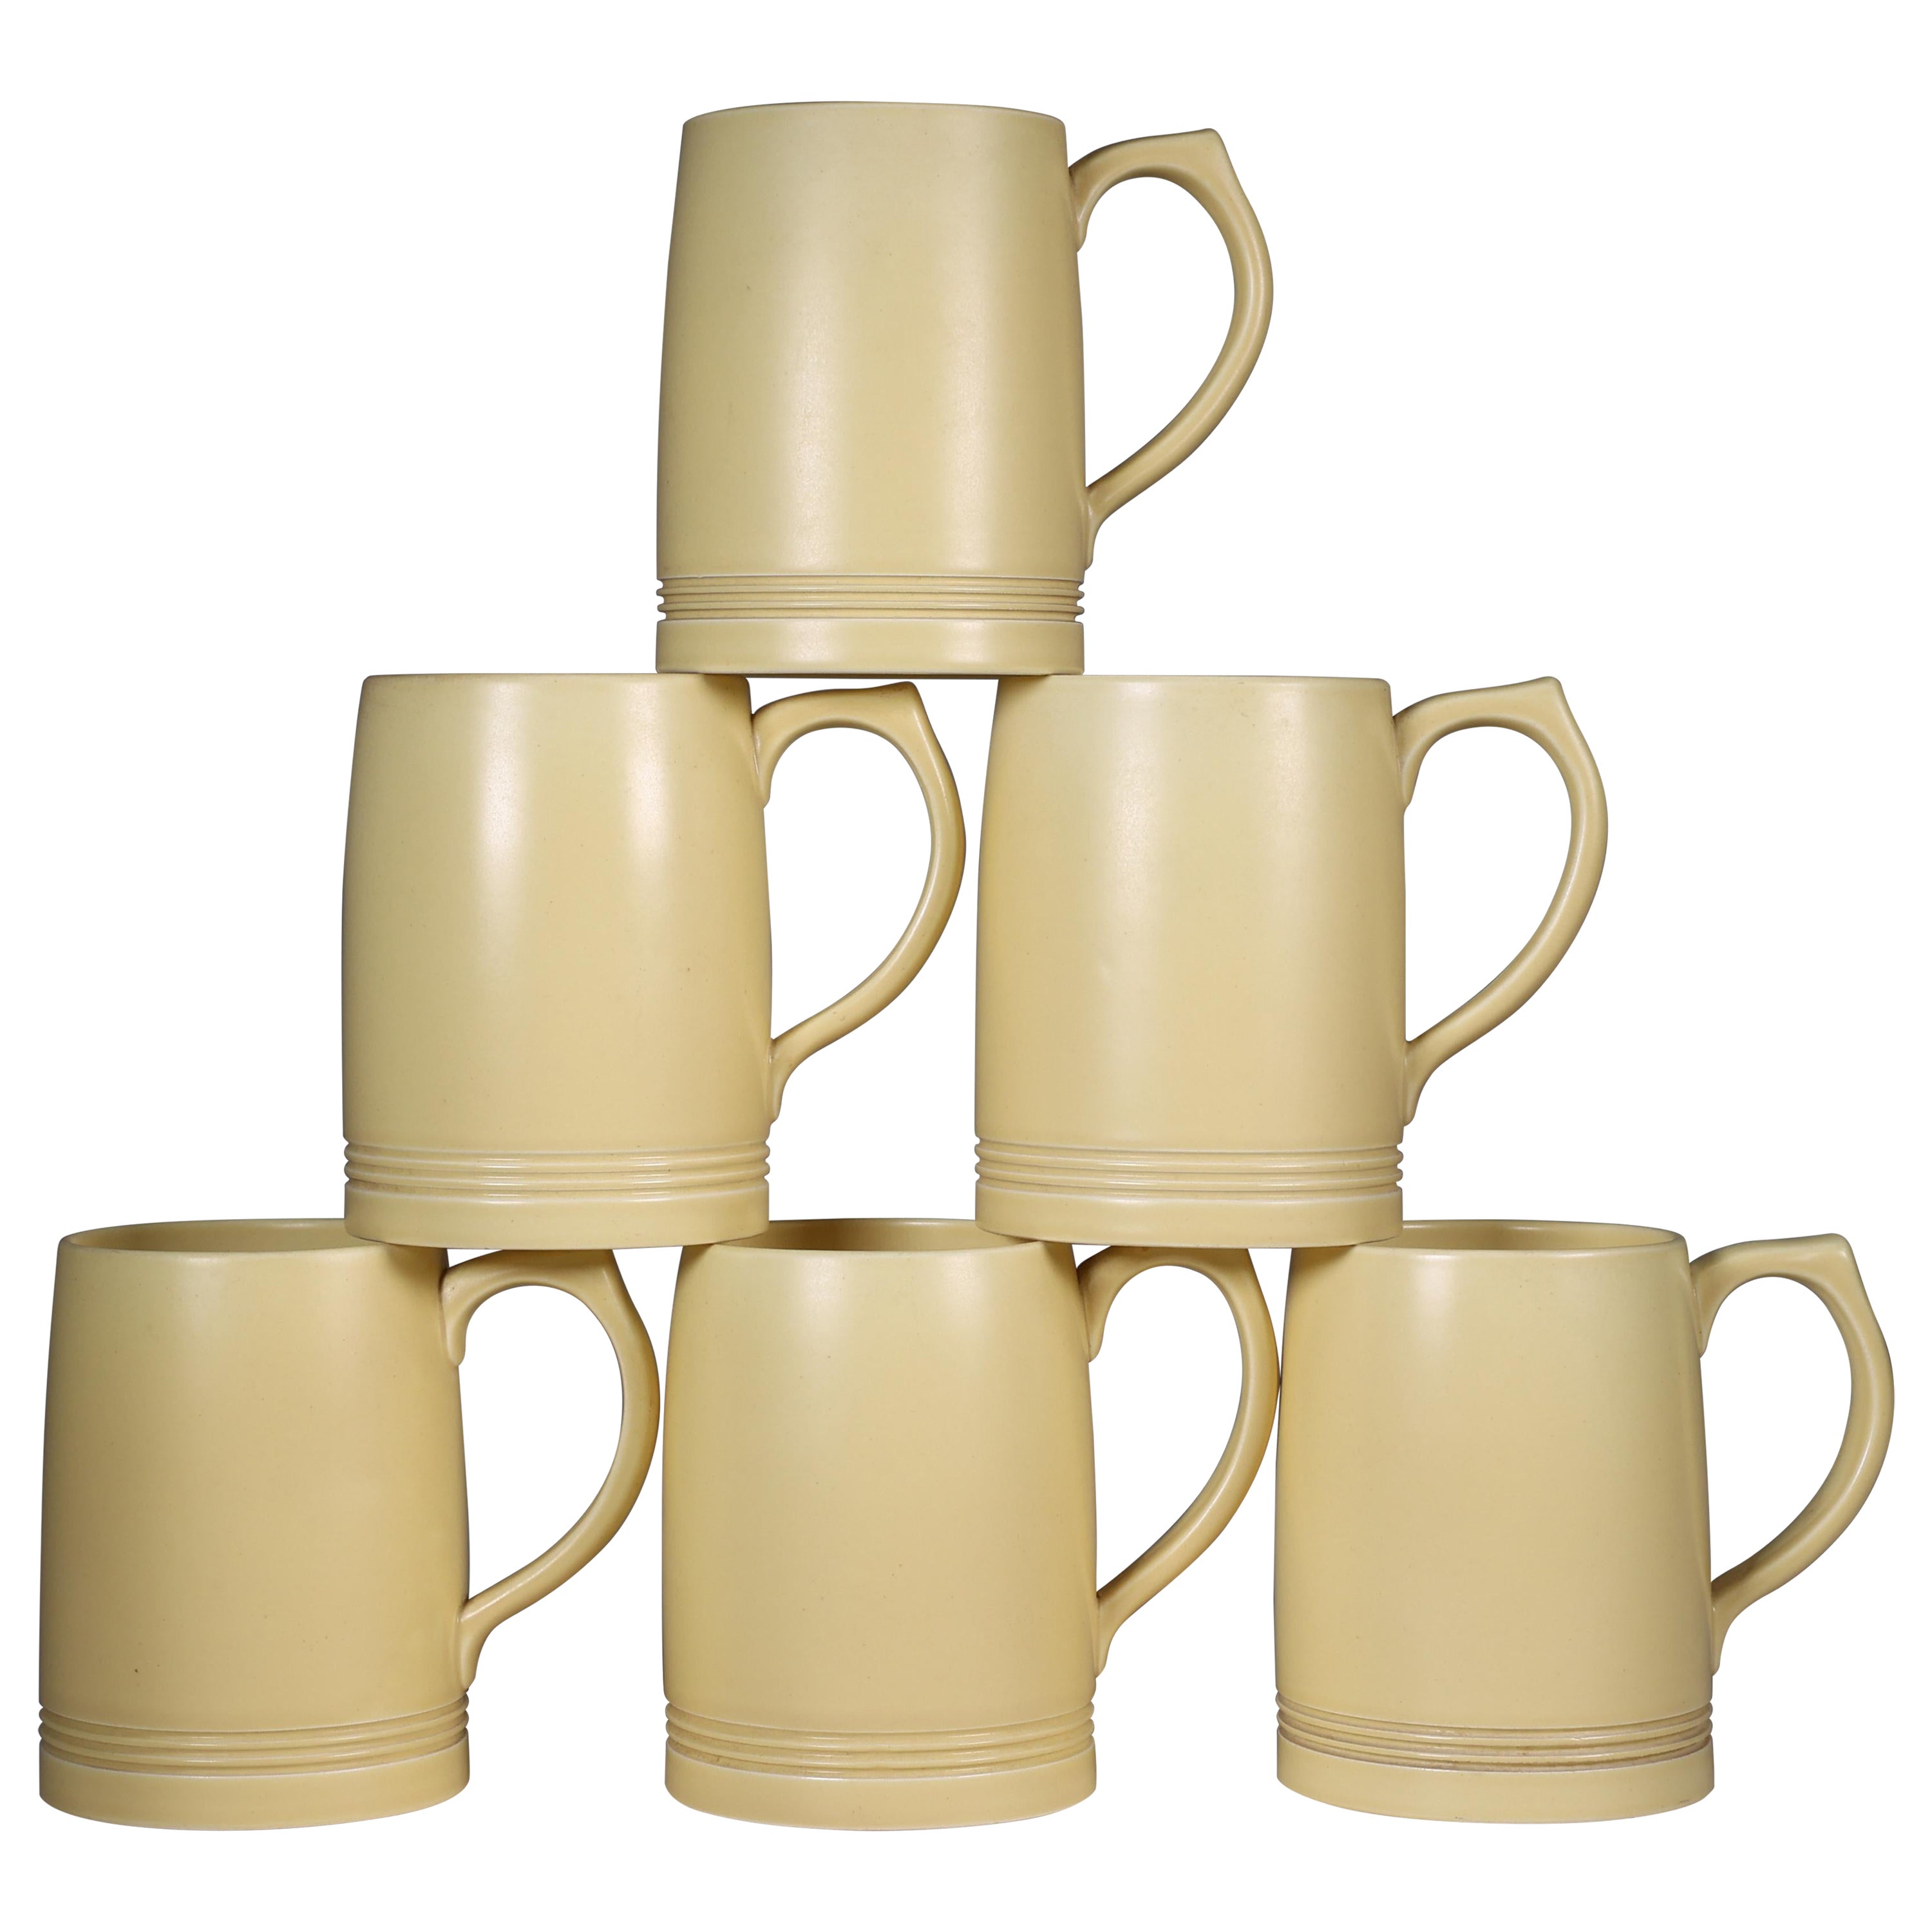 Keith Murray for Wedgwood. A rare complete and original set of six lemonade mugs For Sale